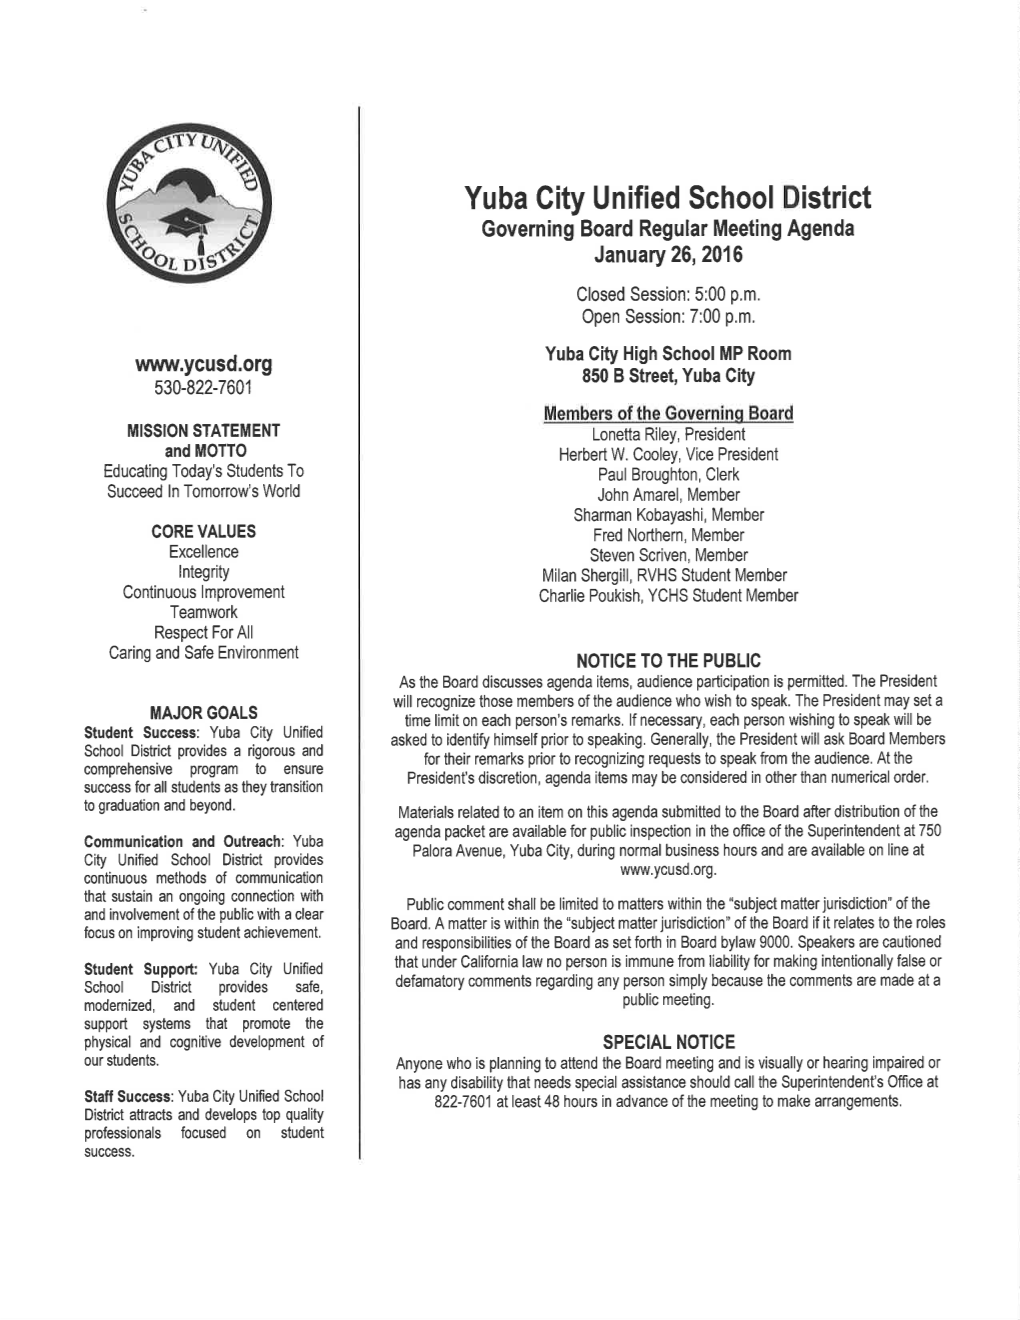 Yuba City Unified School District Governing Board Regular Meeting Agenda January 26,2016